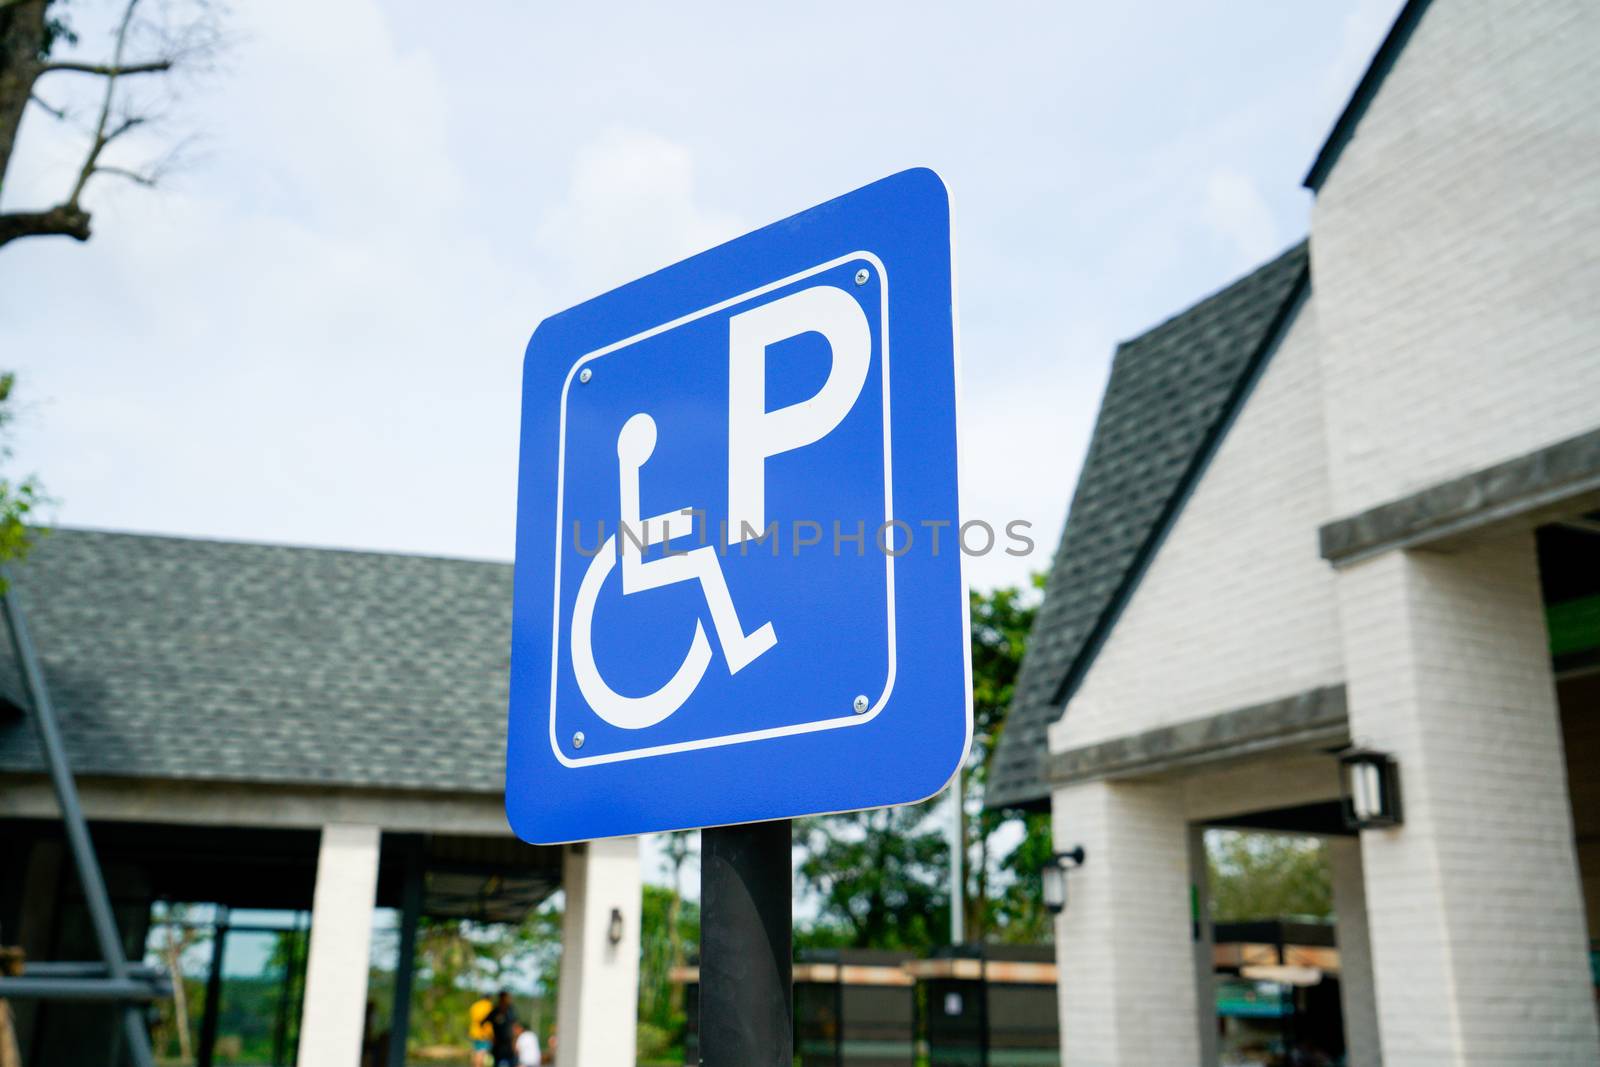 Disabled sign car park at gas station